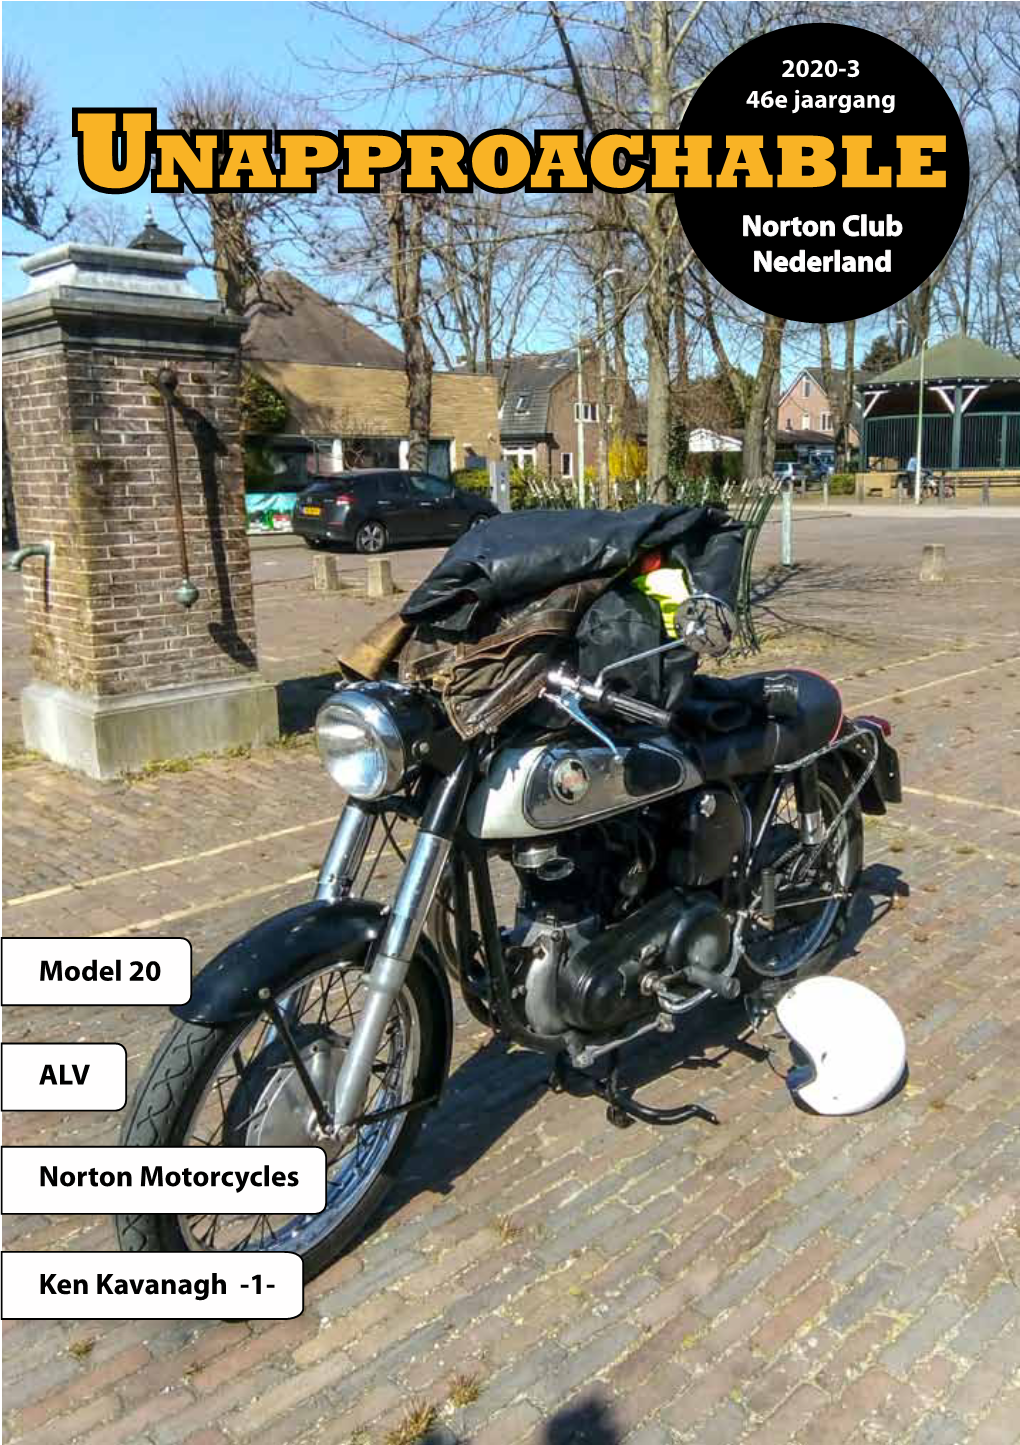 Unapproachable Norton Club Nederland